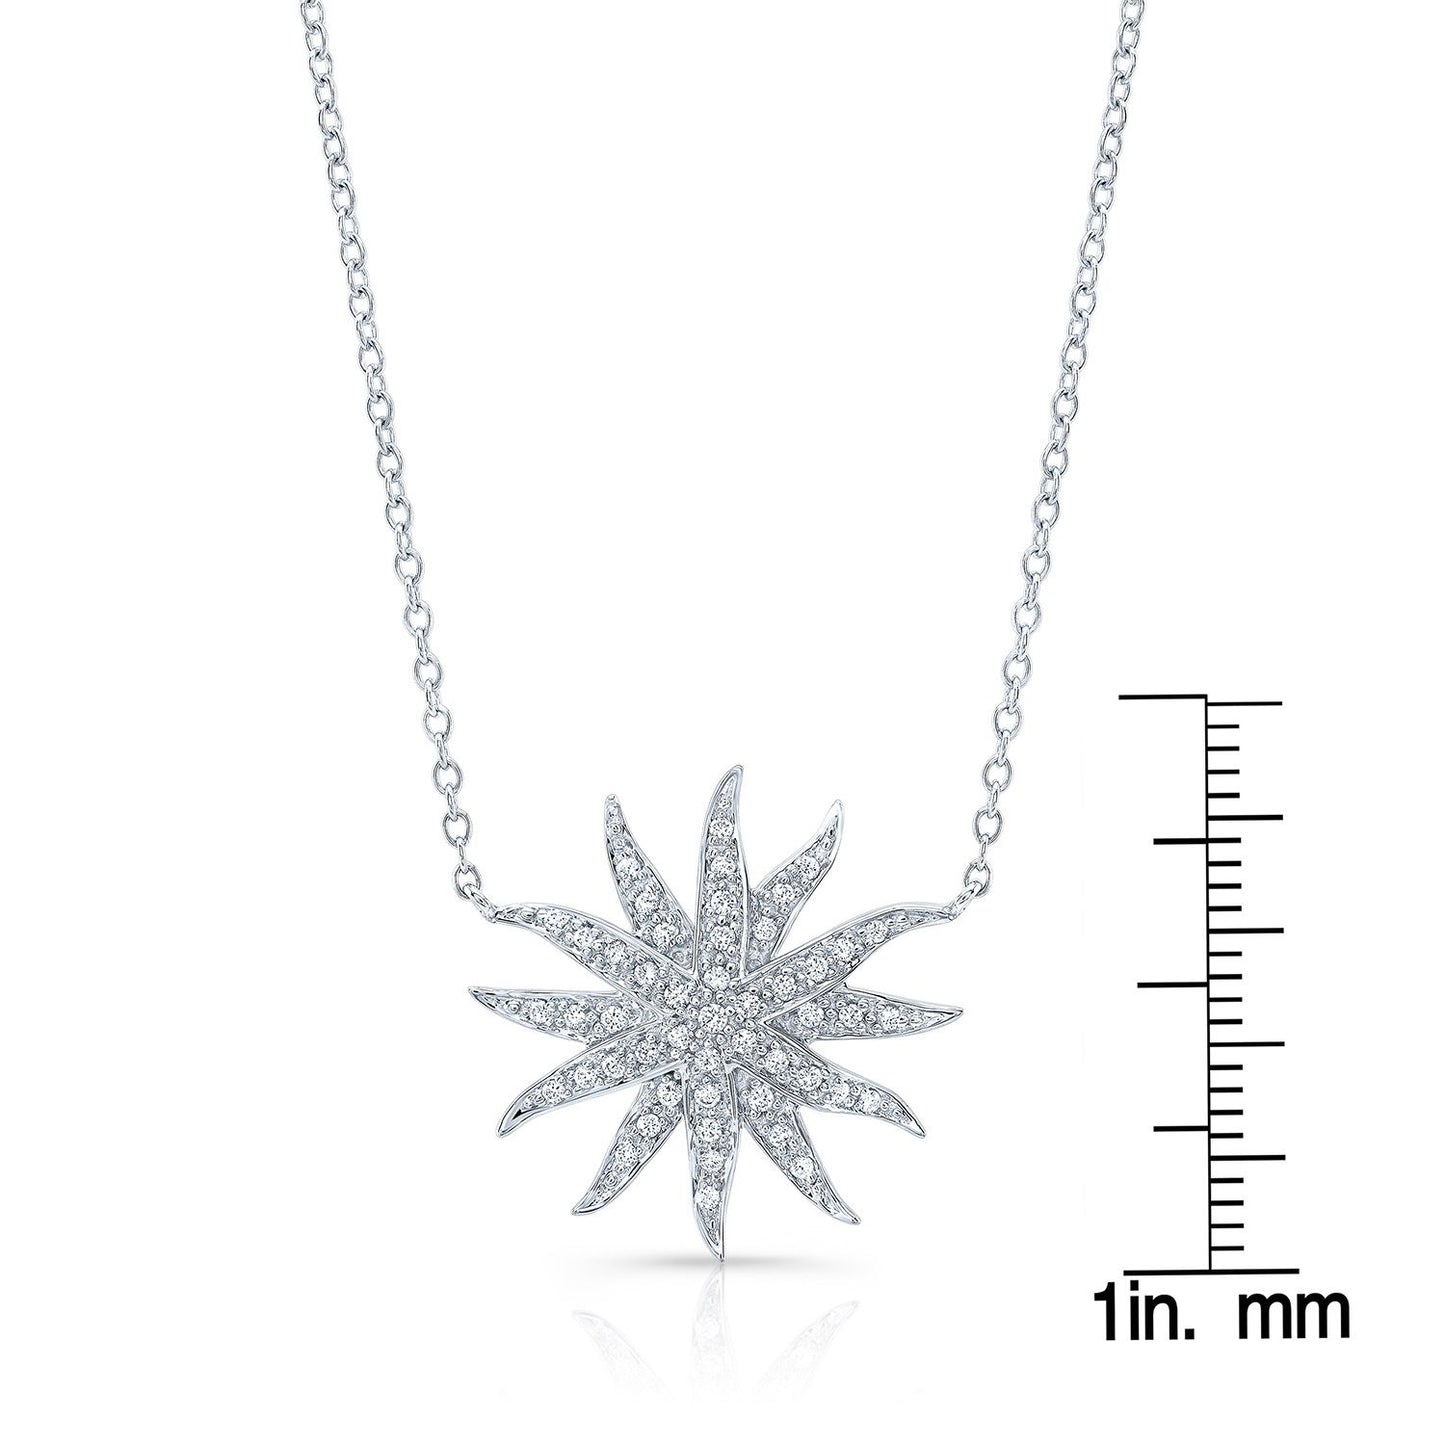 Diamond Pave Aqua Star Necklace In 14k White Gold, 16-18 Inch Adj Chain